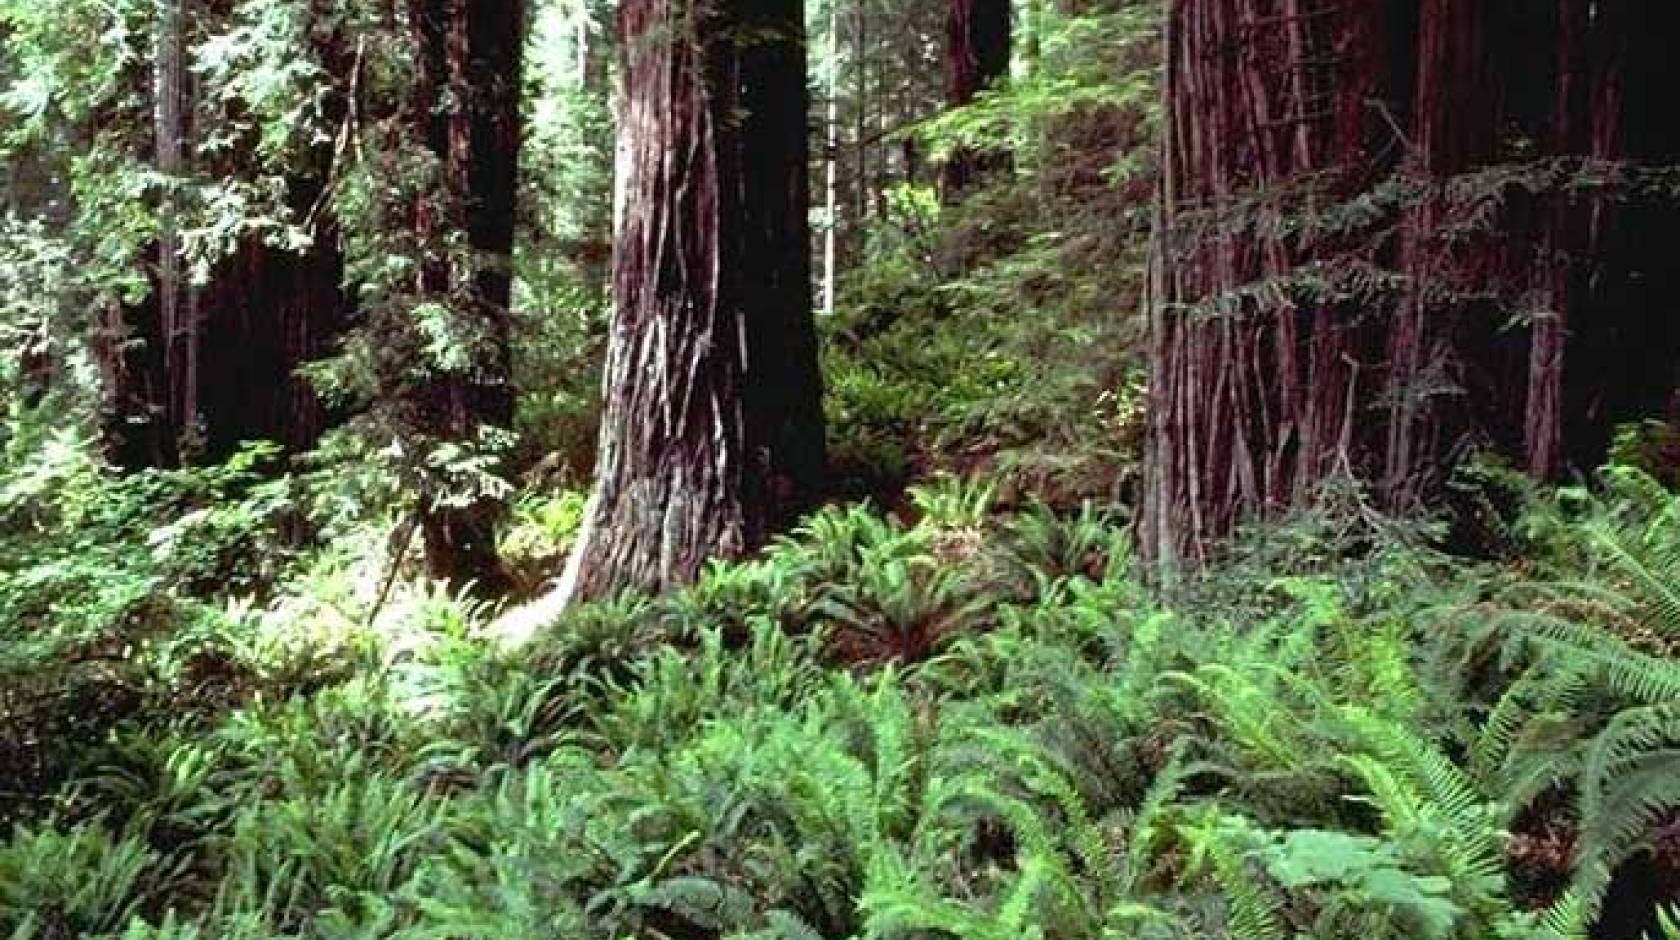 Redwood ferns